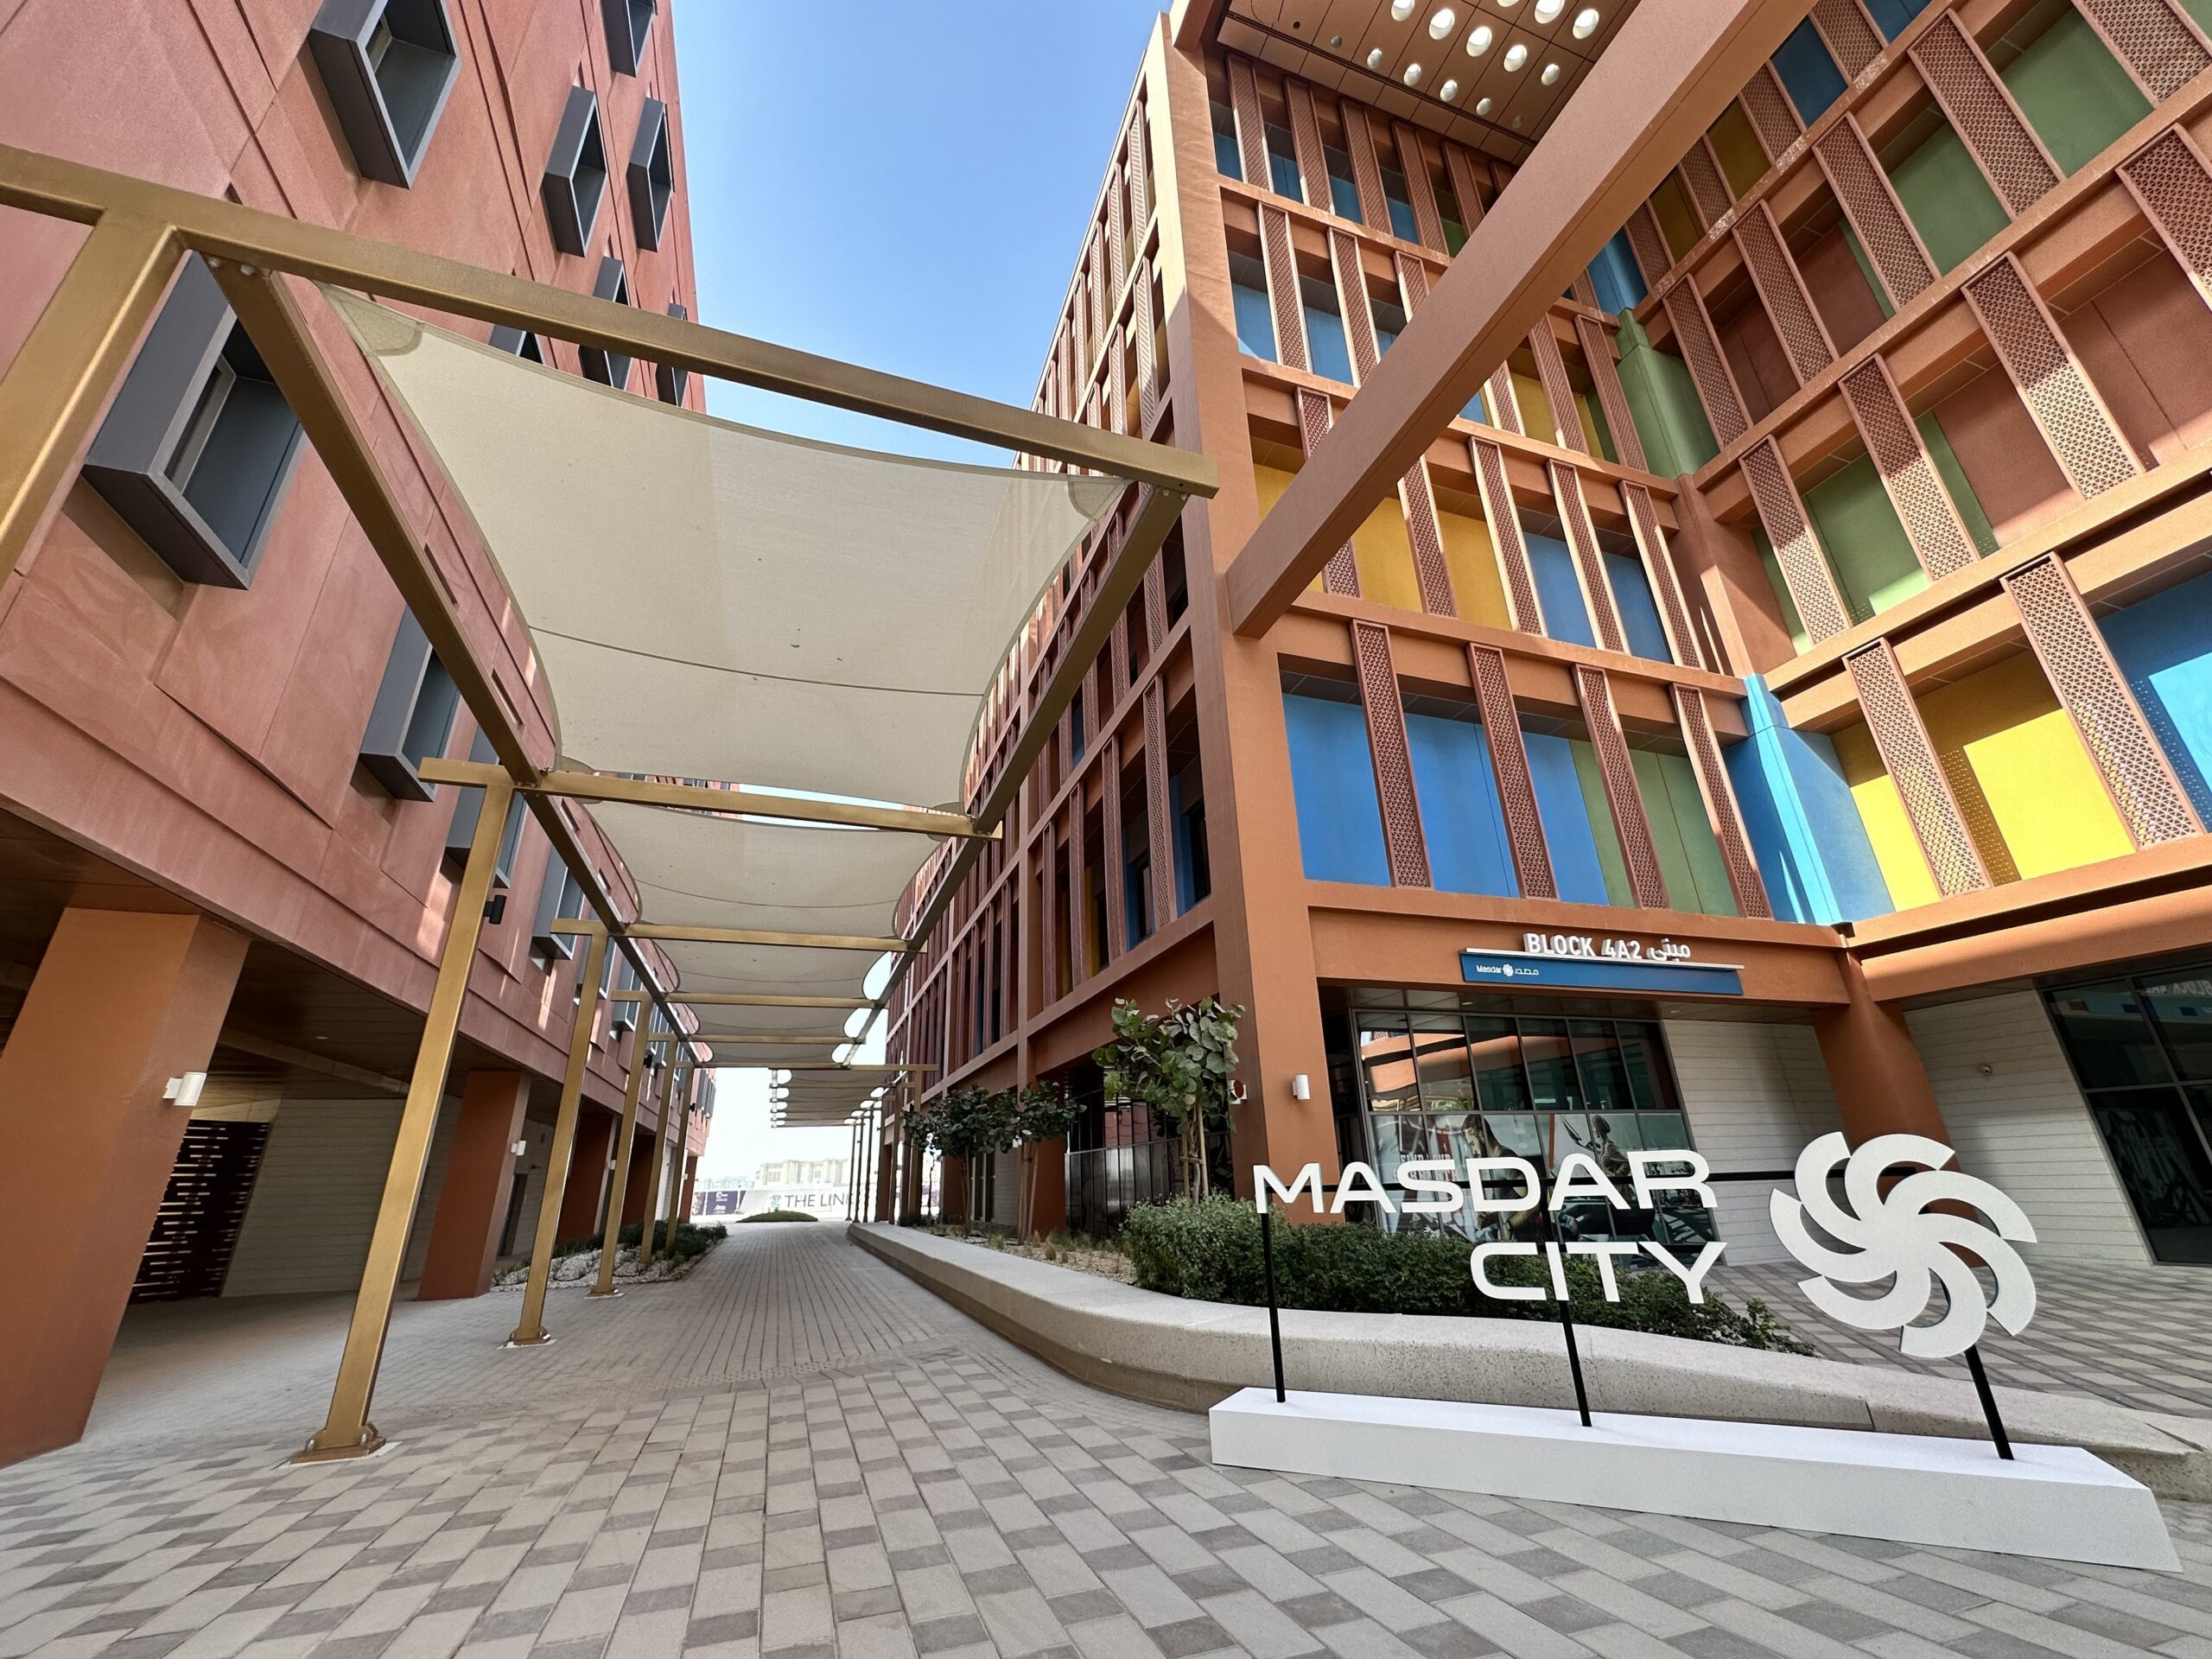 Masdar's base of Masdar City is focused on sustainability